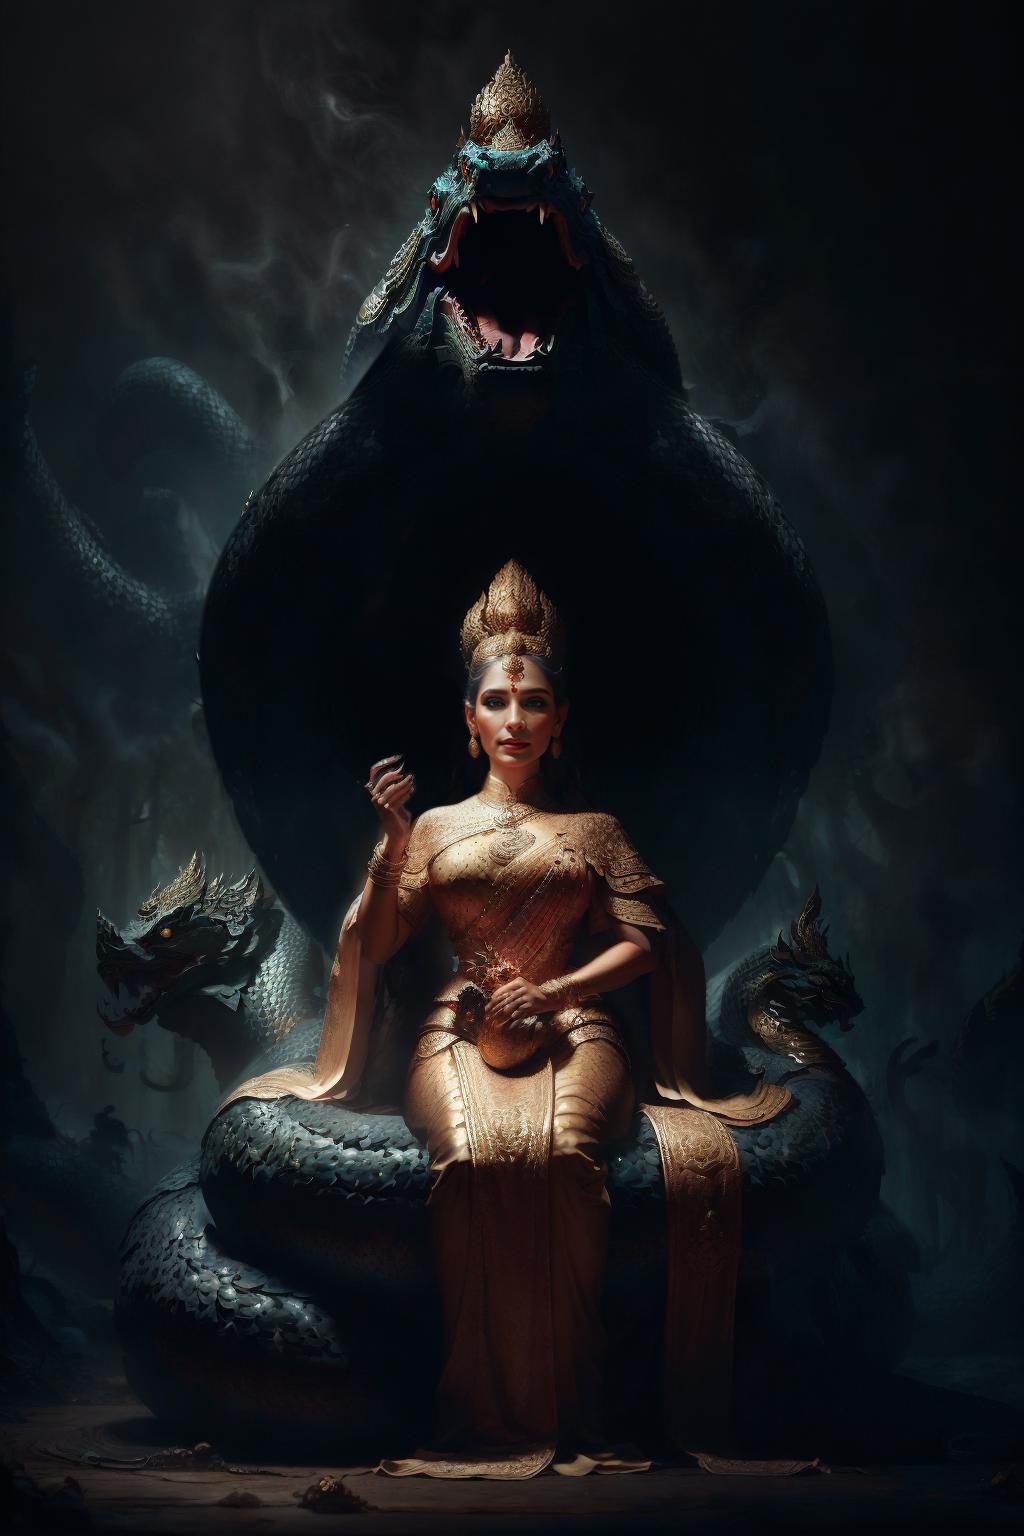 NAGA : The Serpent God image by poomshift